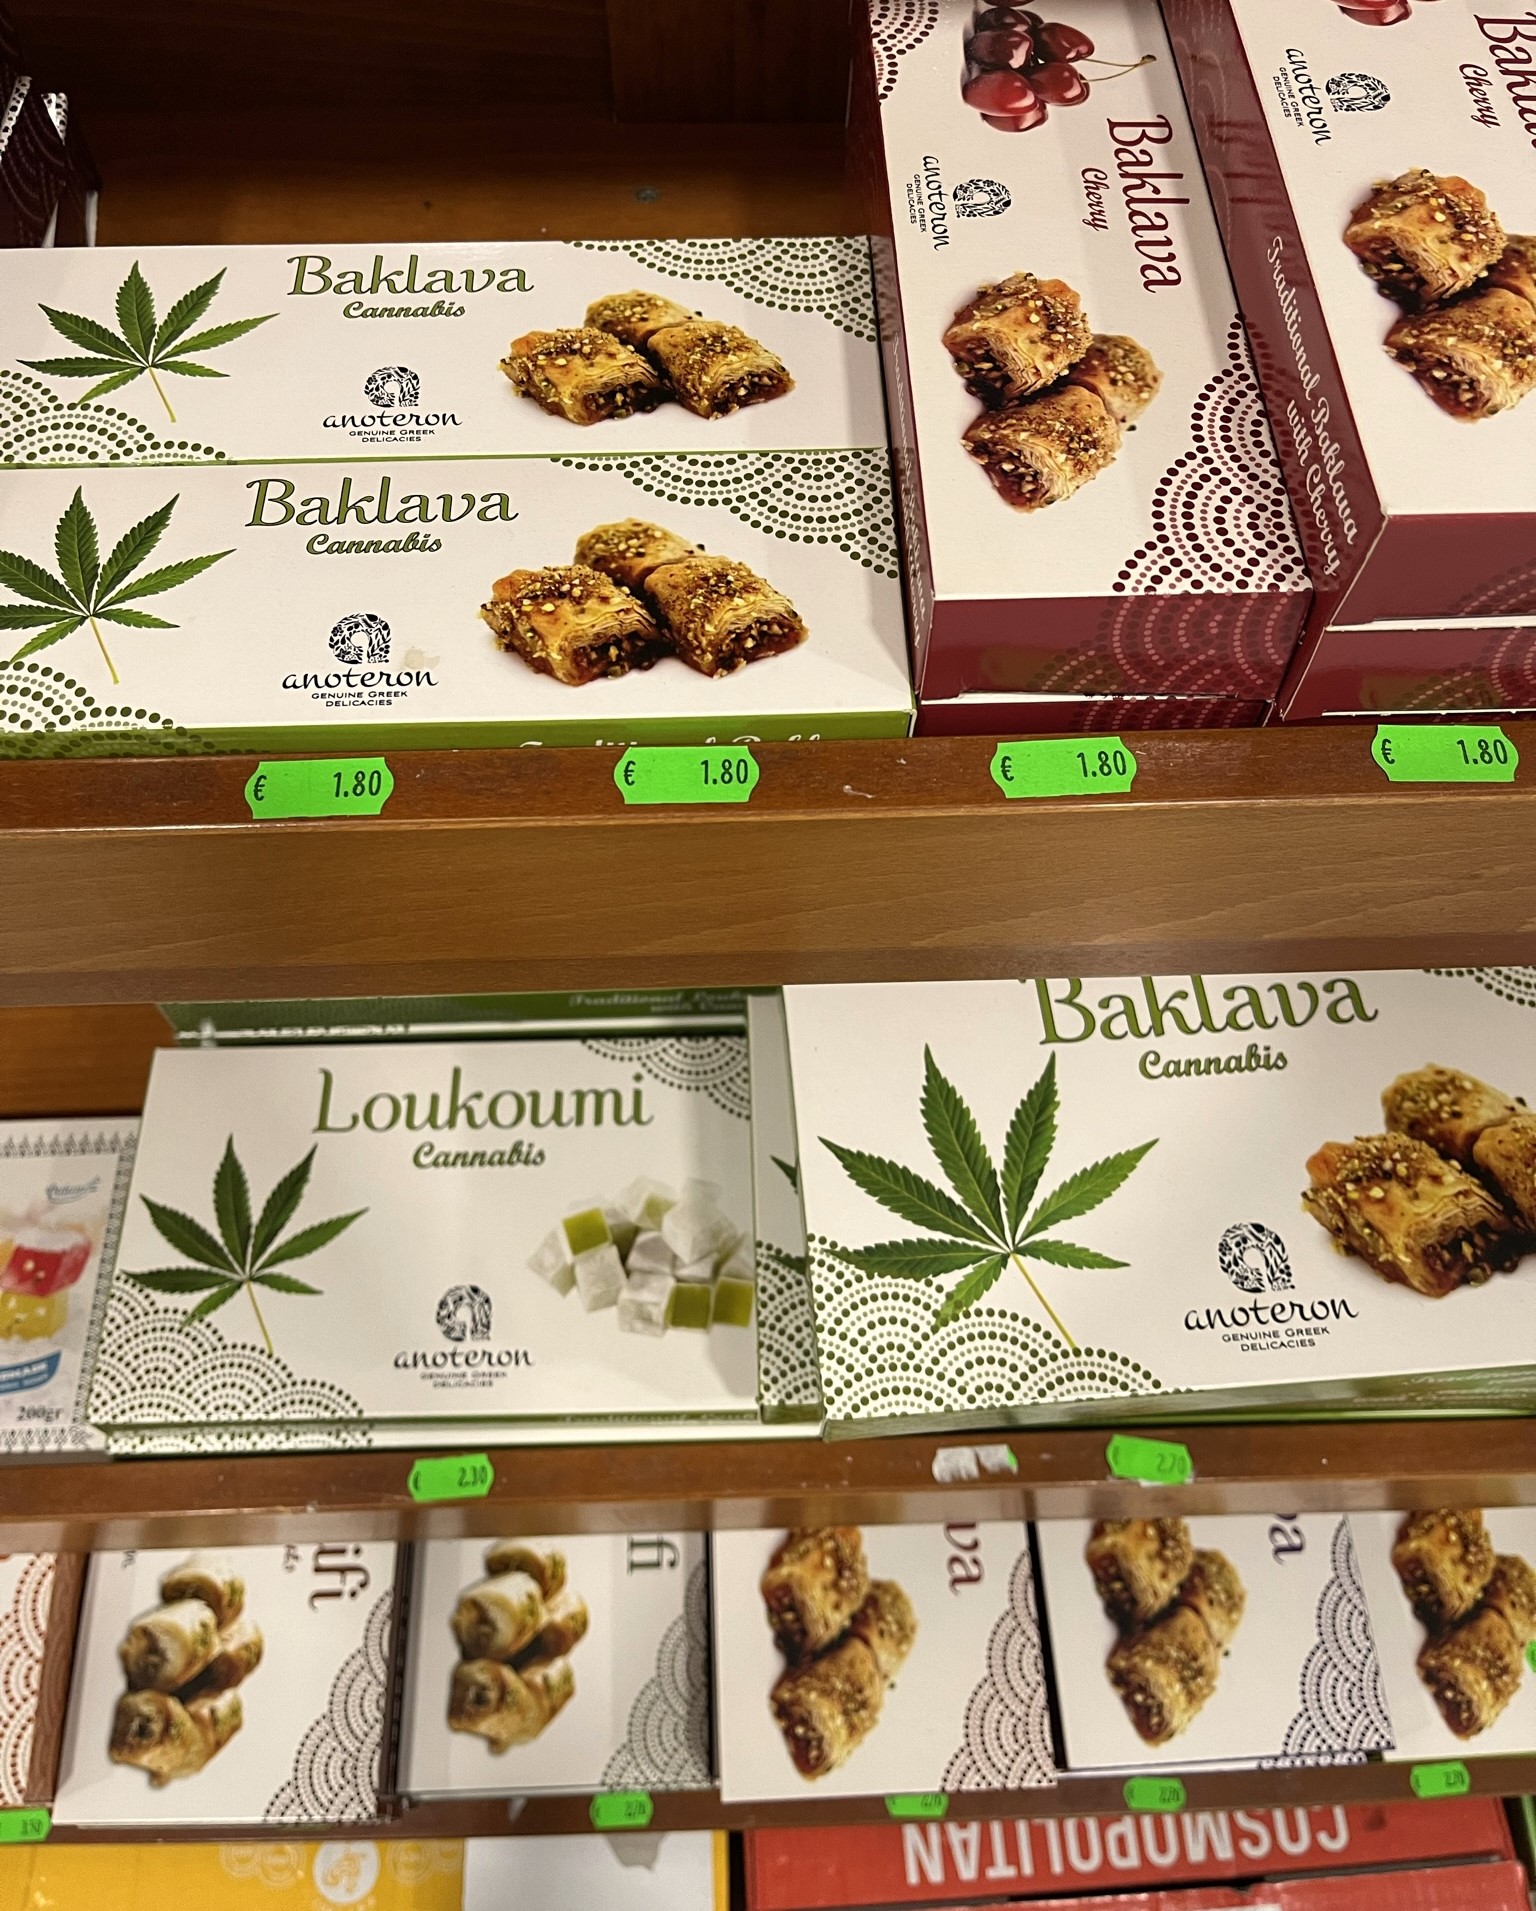 mini baklava snack and loukoumi found in a store in Rhodes